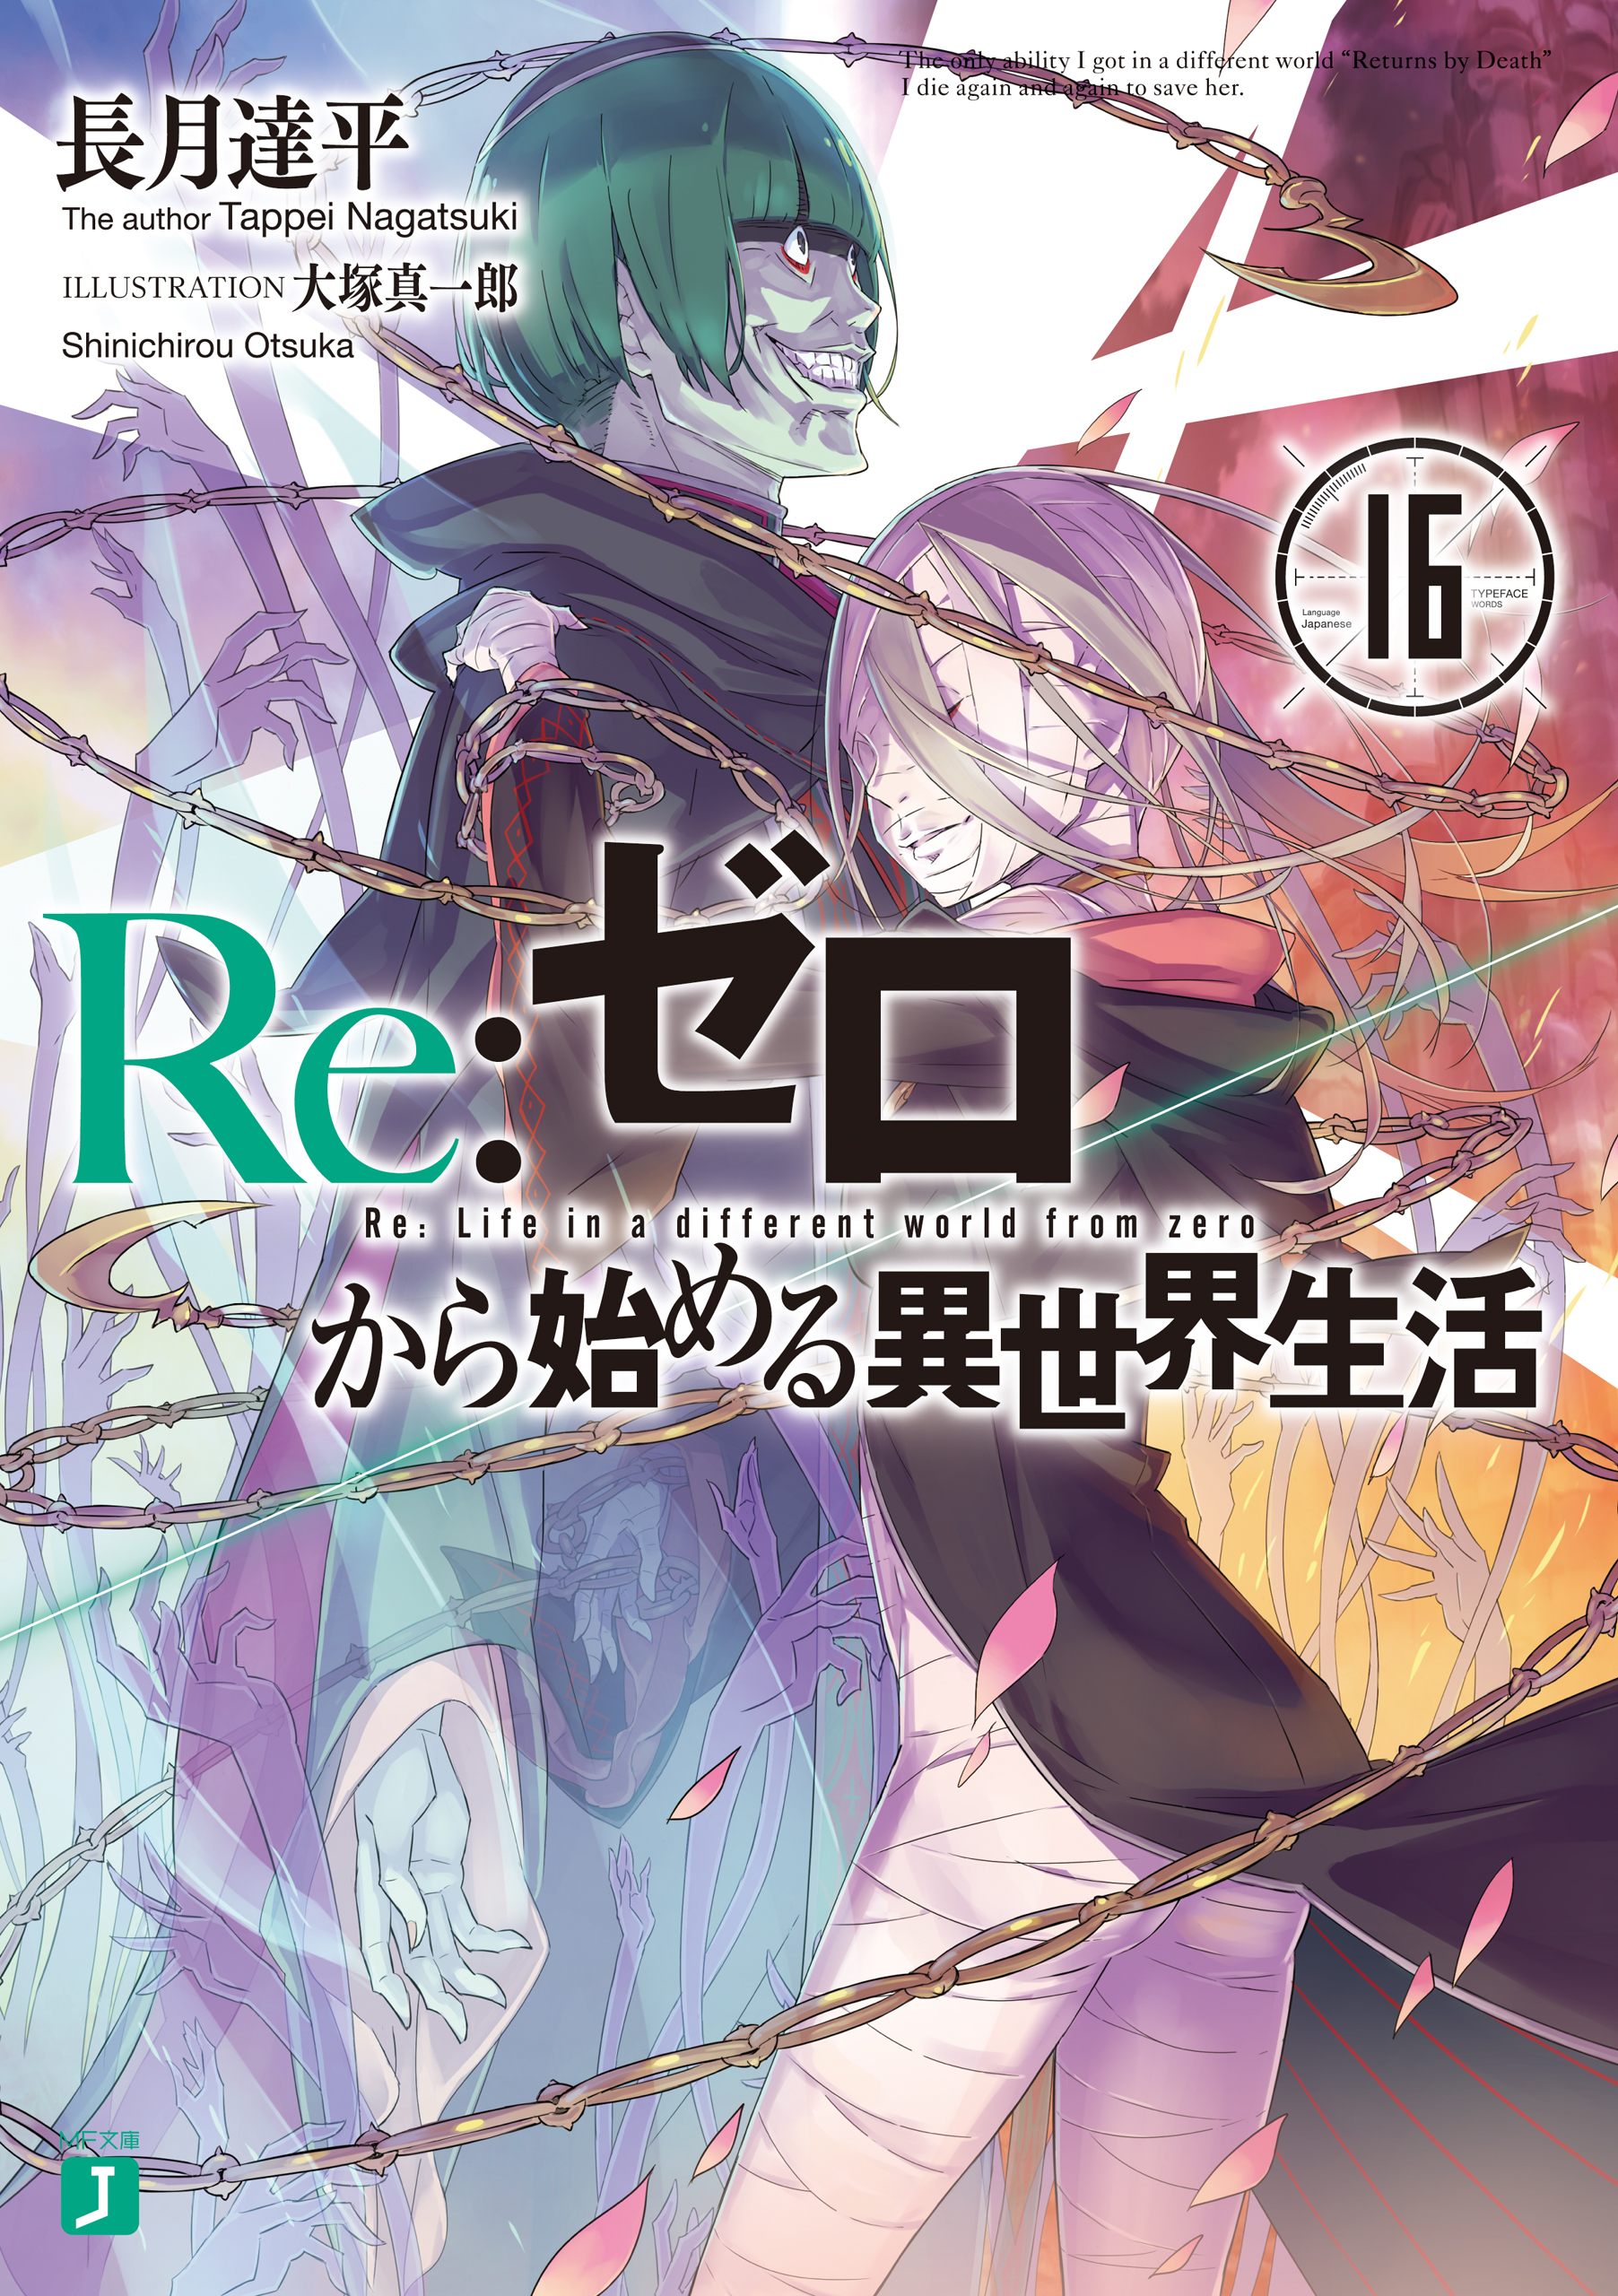 Re:Zero Light Novel Volume 16 | Wiki |